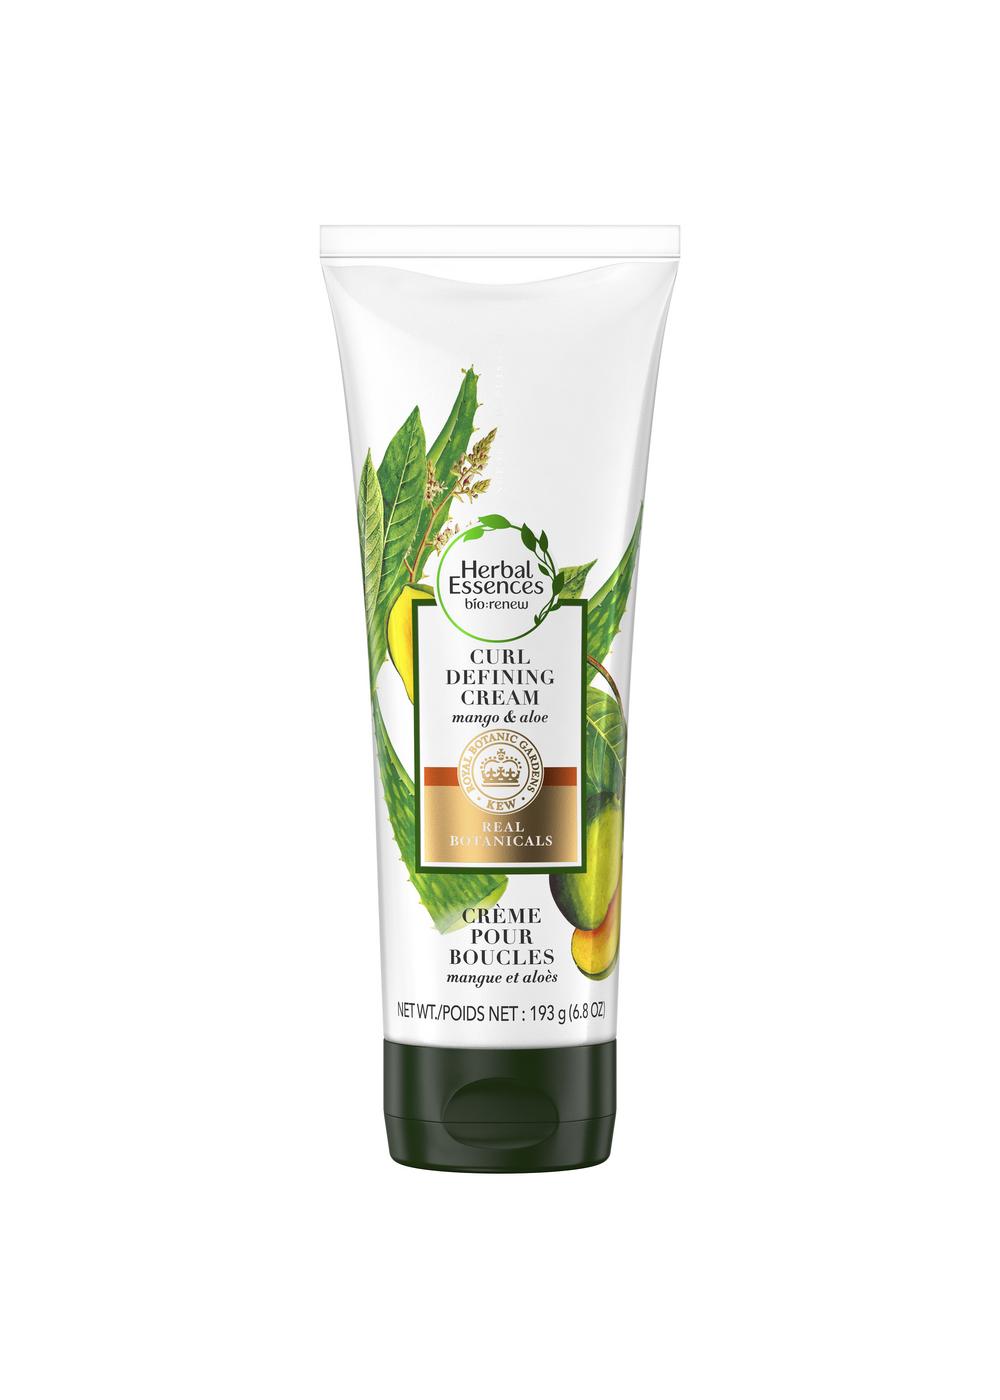 Herbal Essences bio:renew Mango & Aloe Curl Defining Cream; image 1 of 10